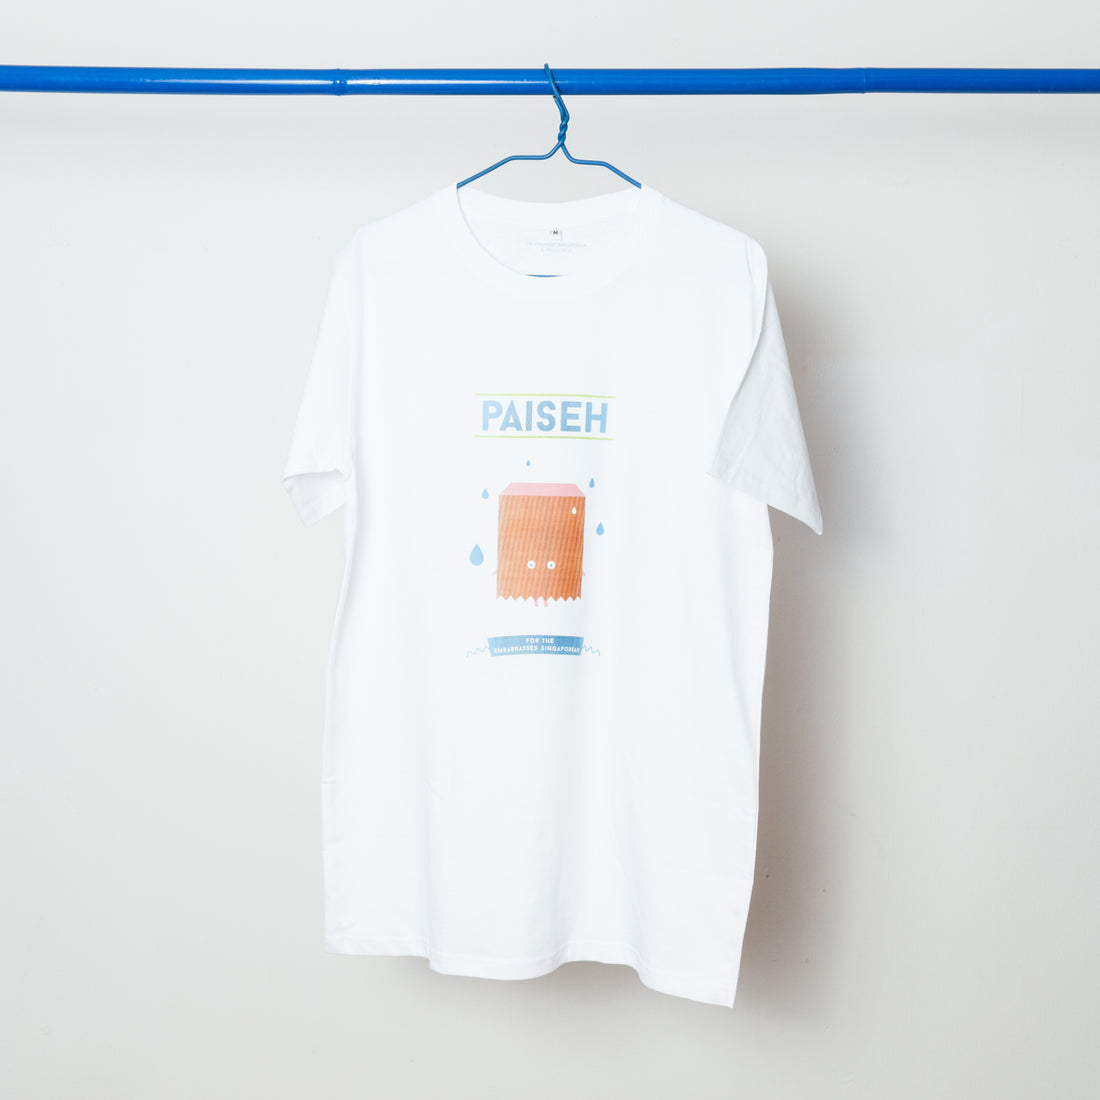 Paiseh T-Shirt